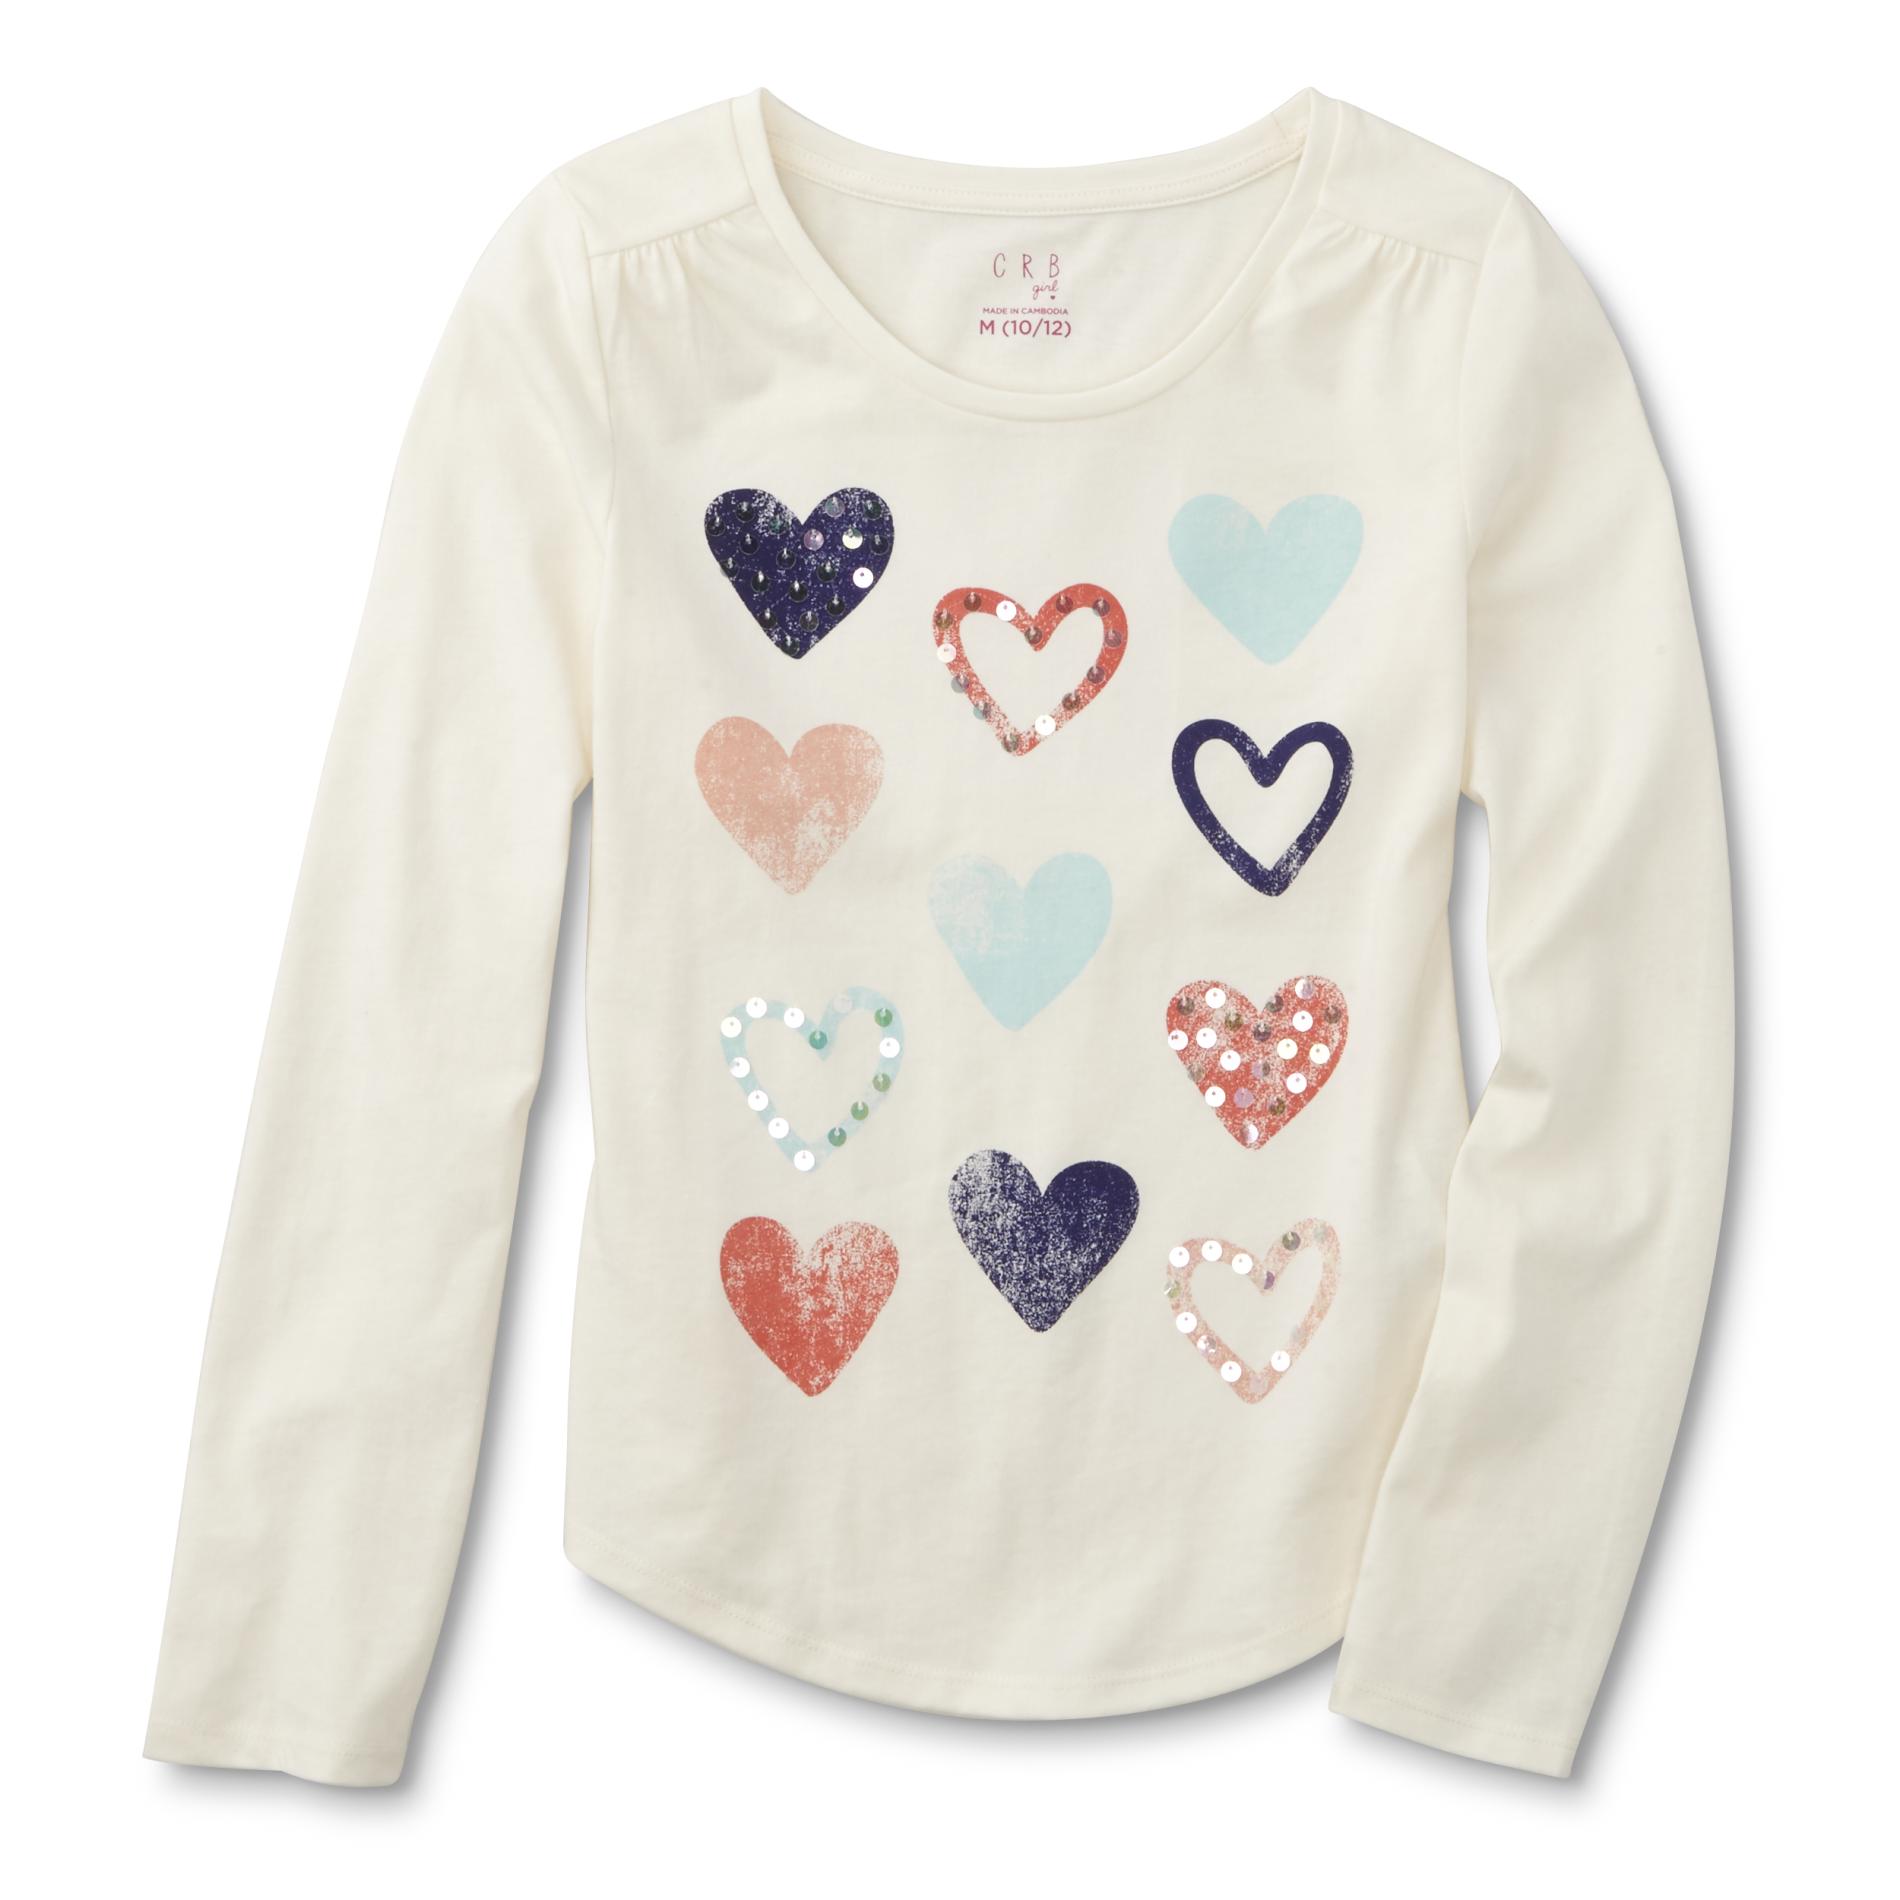 Canyon River Blues Girls' Embellished Shirt - Hearts